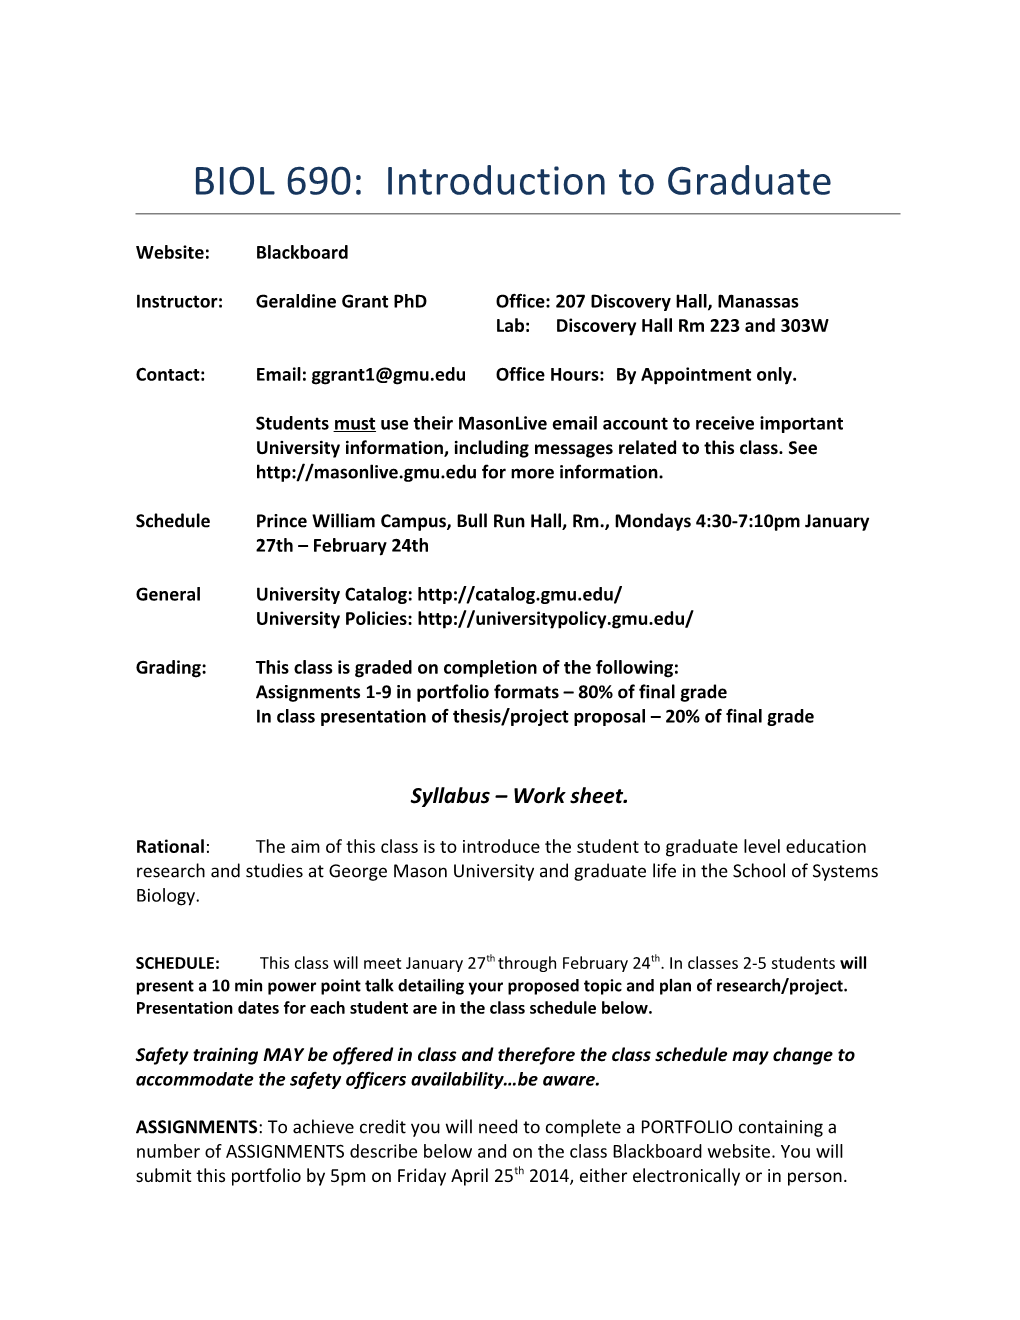 Introduction to Graduate Studies: Syllabus Work Sheet